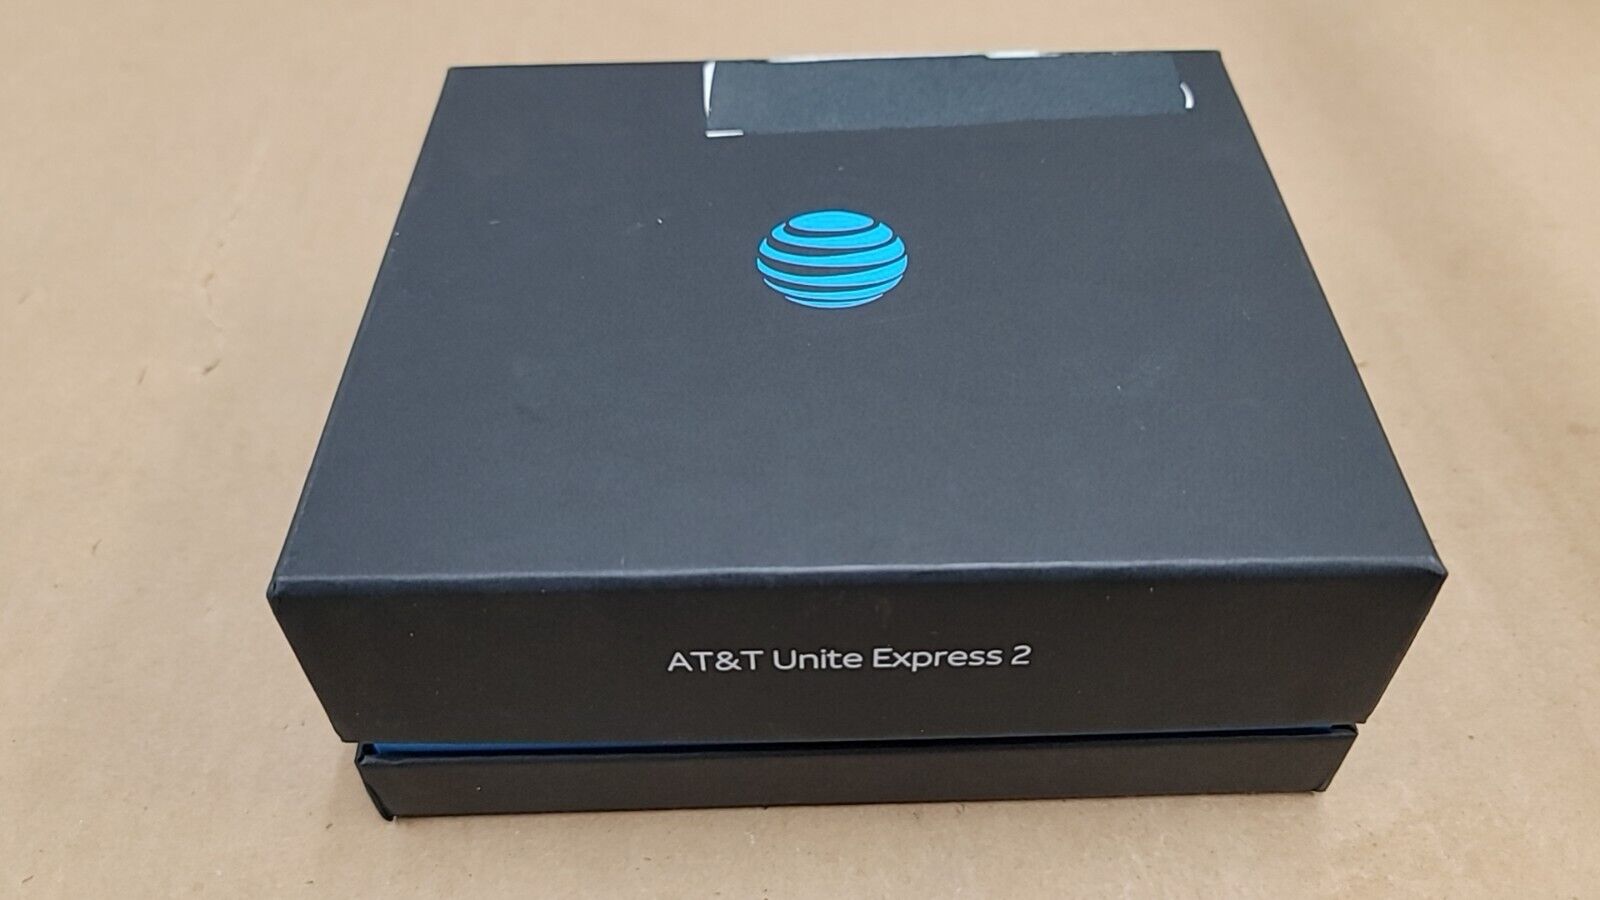 NETGEAR Unite Express 2 - 797S - Black (AT&T) 4G LTE Mobile WiFi Hotspot Modem